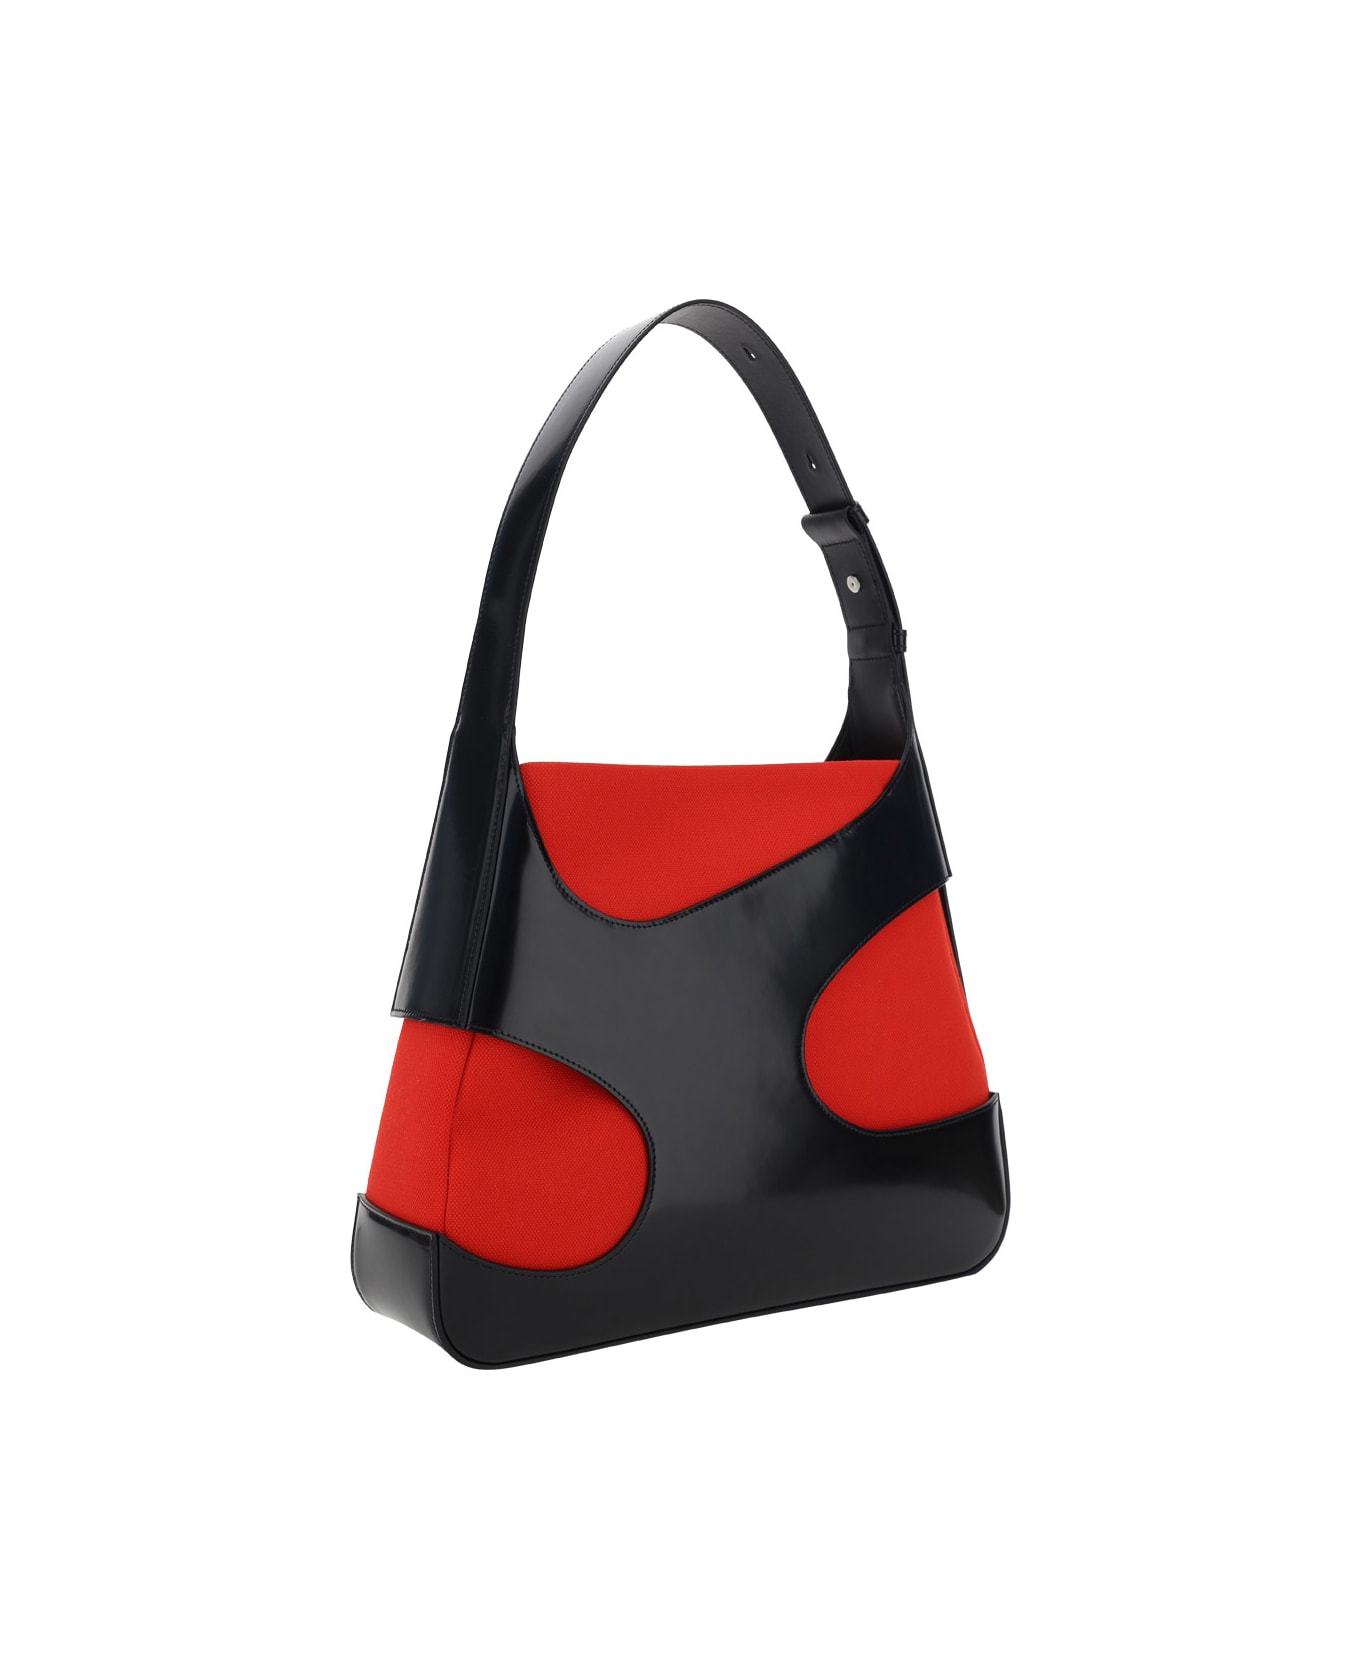 Ferragamo Cut-out Shoulder Bag - Nero/f.red